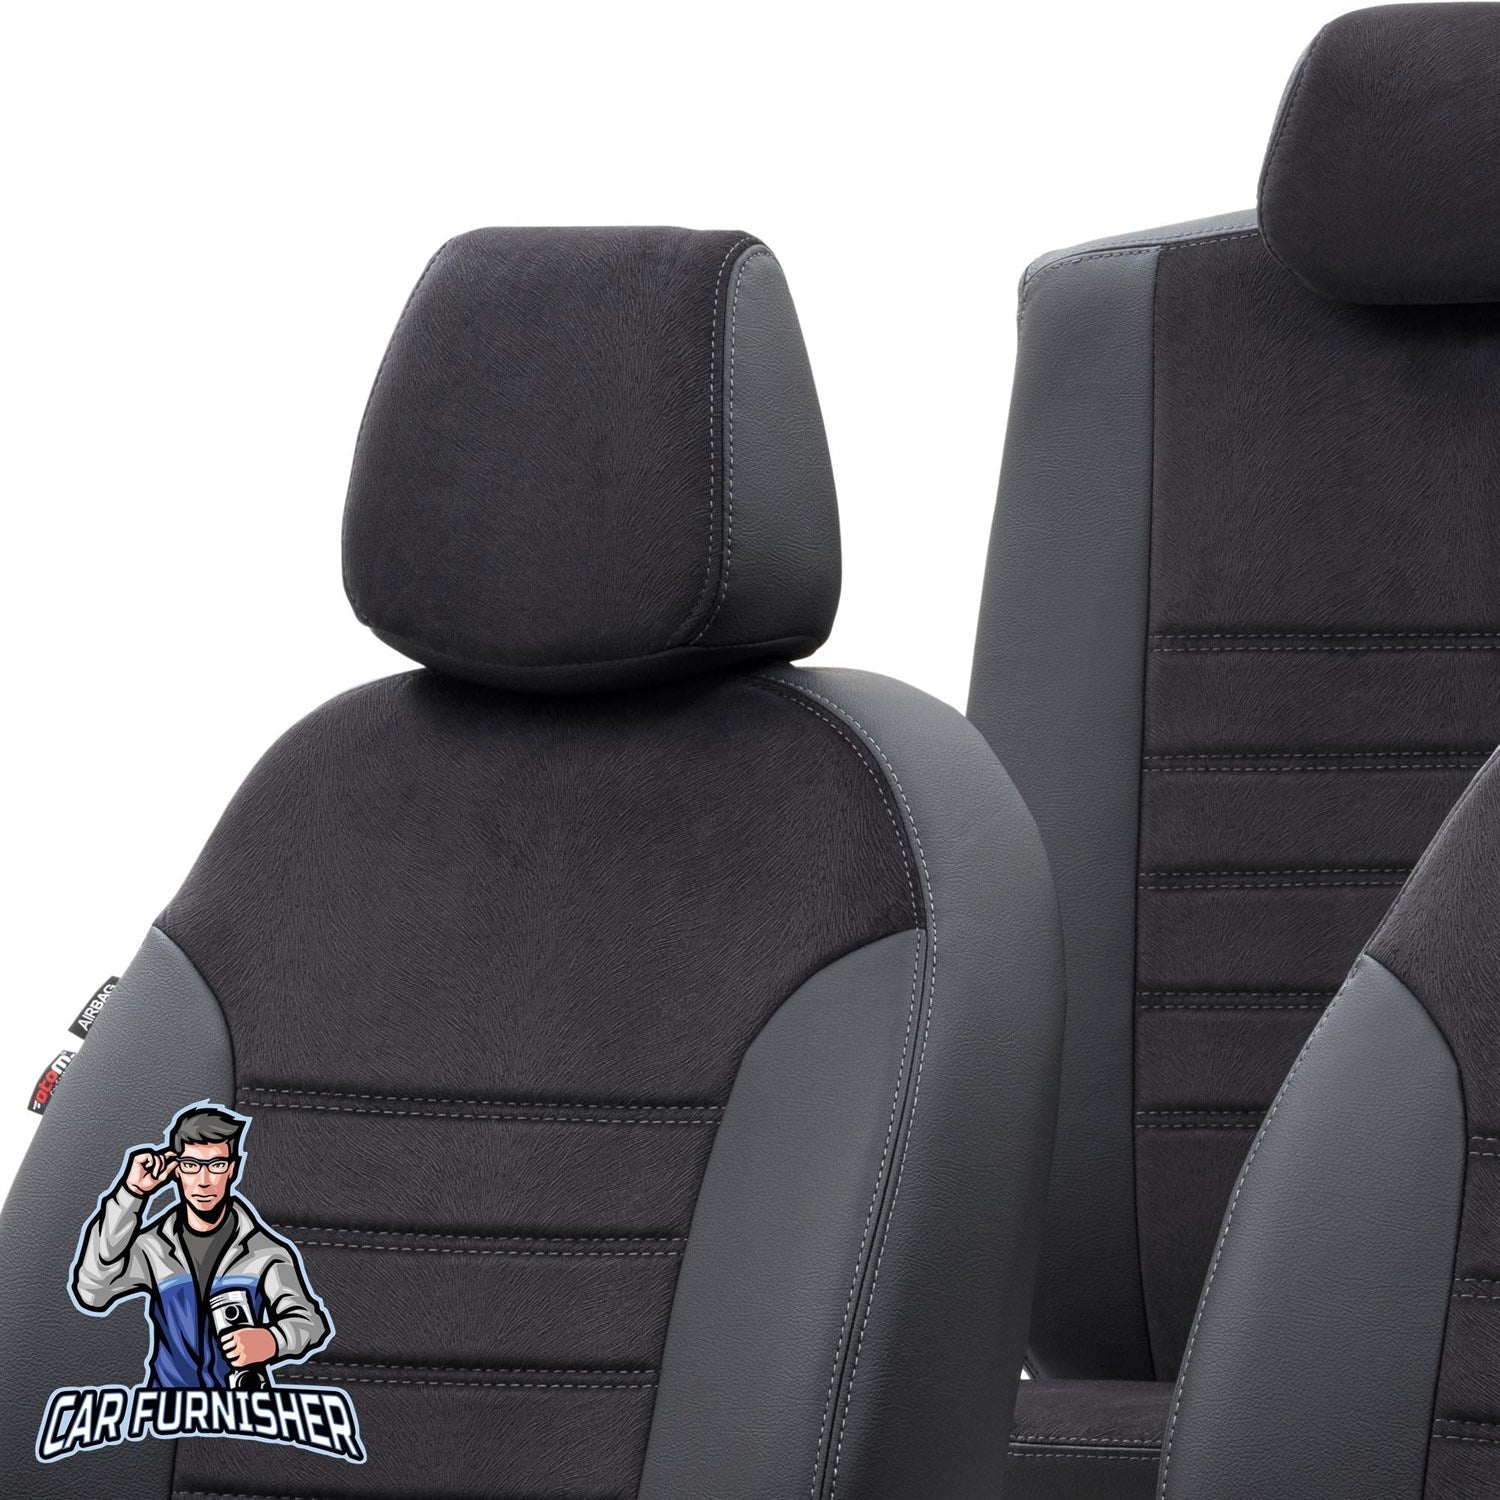 Comfortable Volkswagen Passat Car Seat Cover in Custom Design